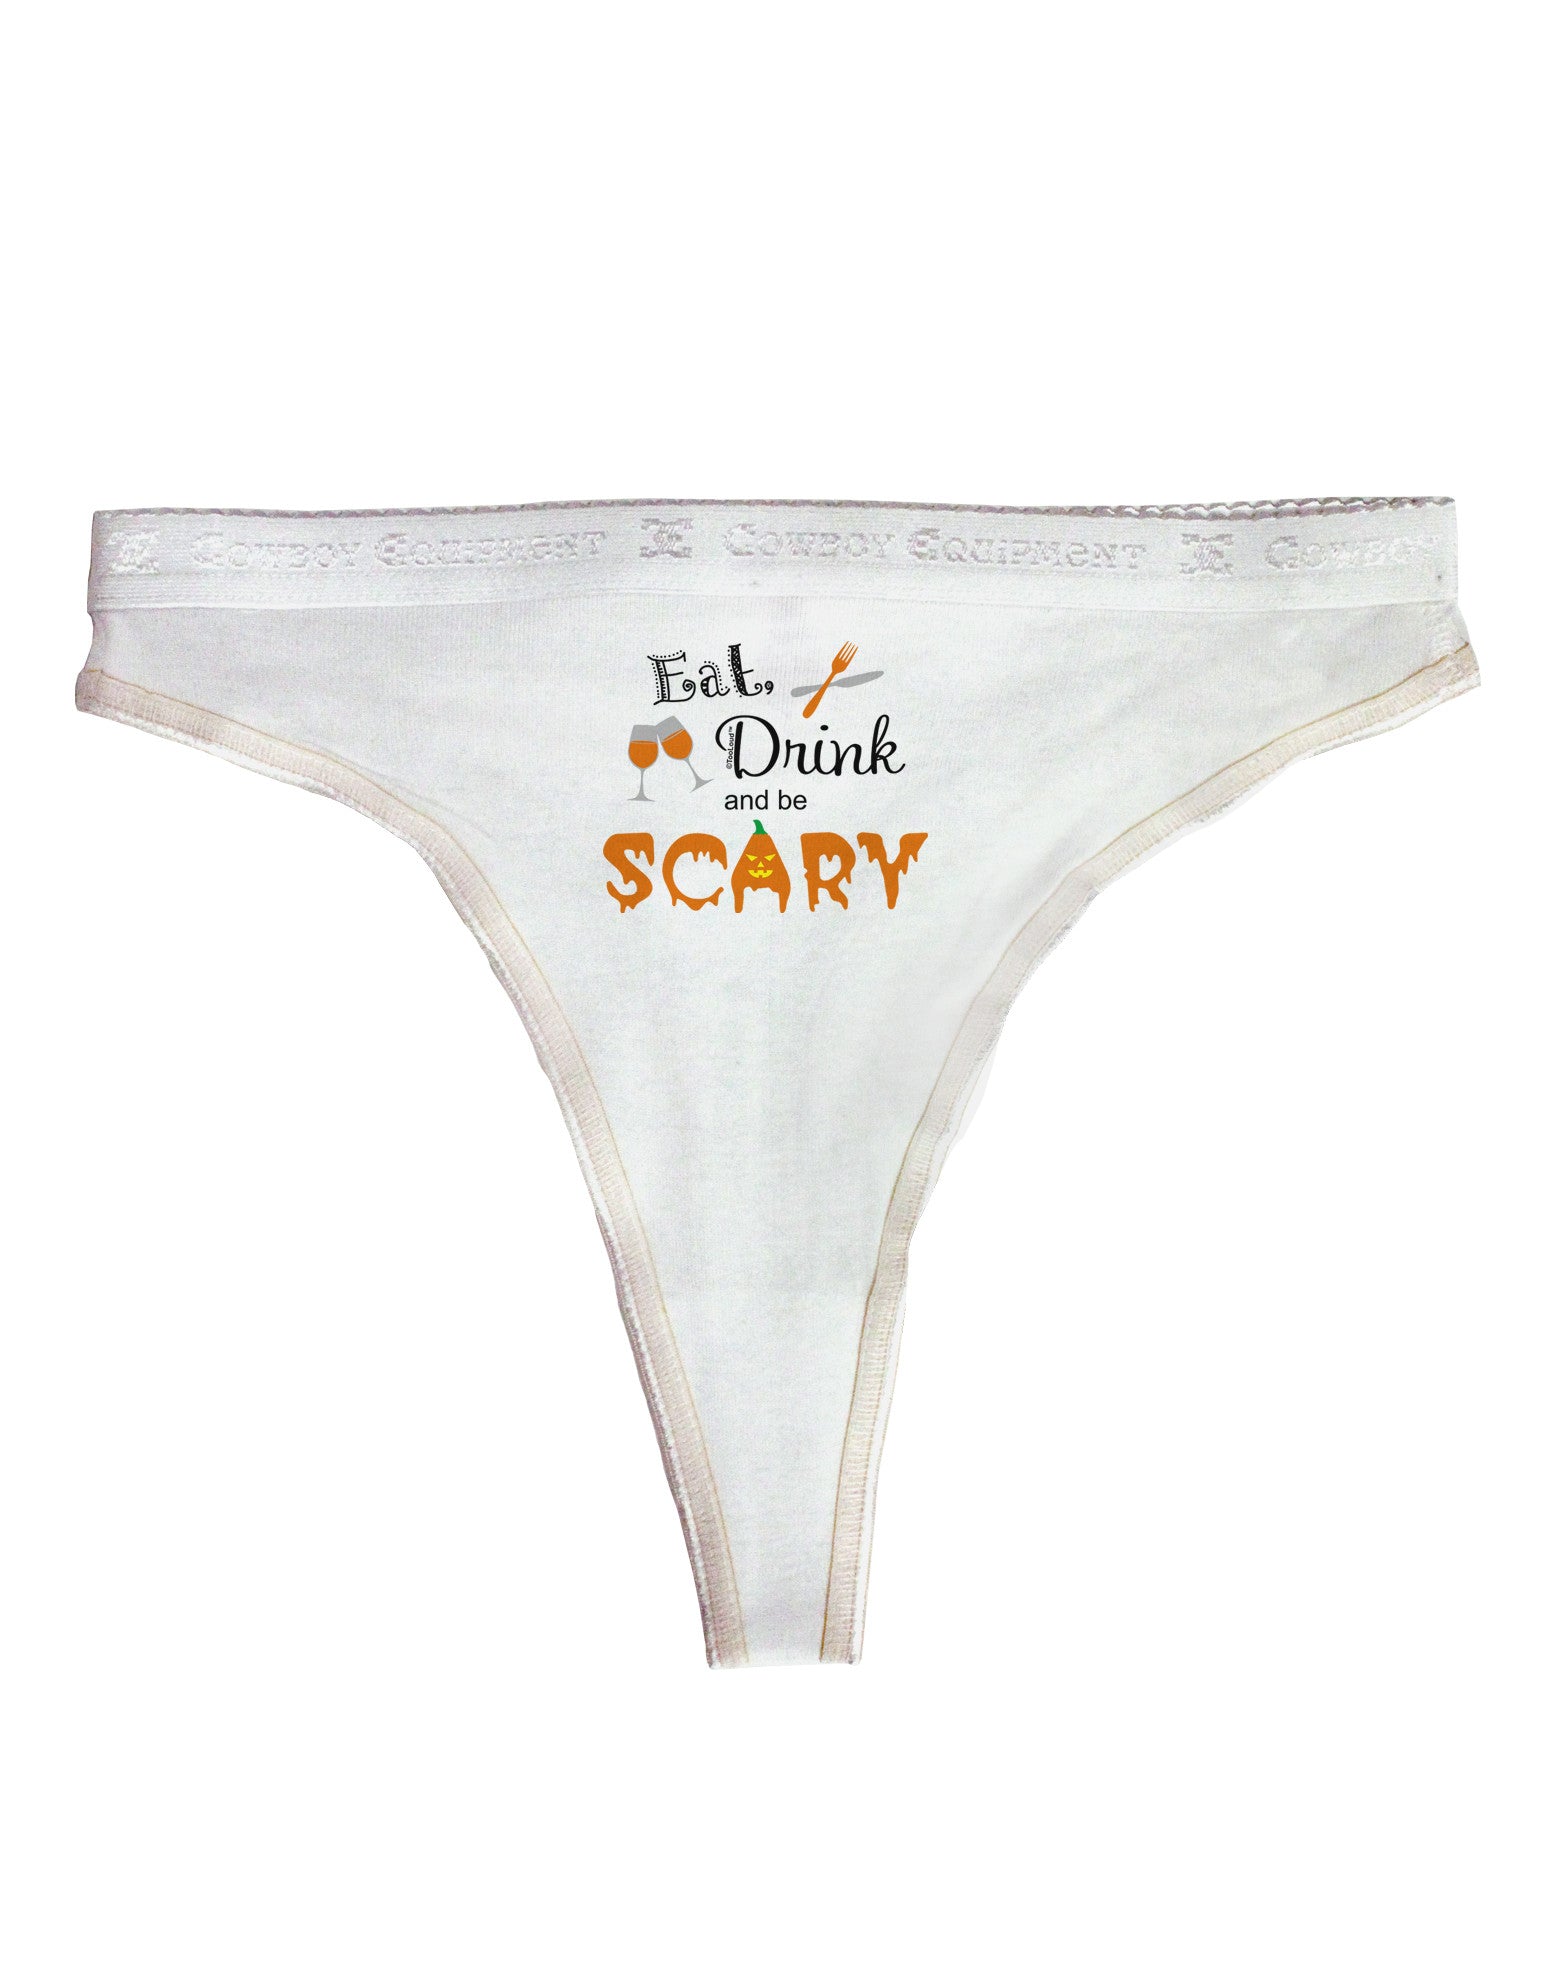 Eat Drink Scary Black Womens Thong Underwear - Davson Sales